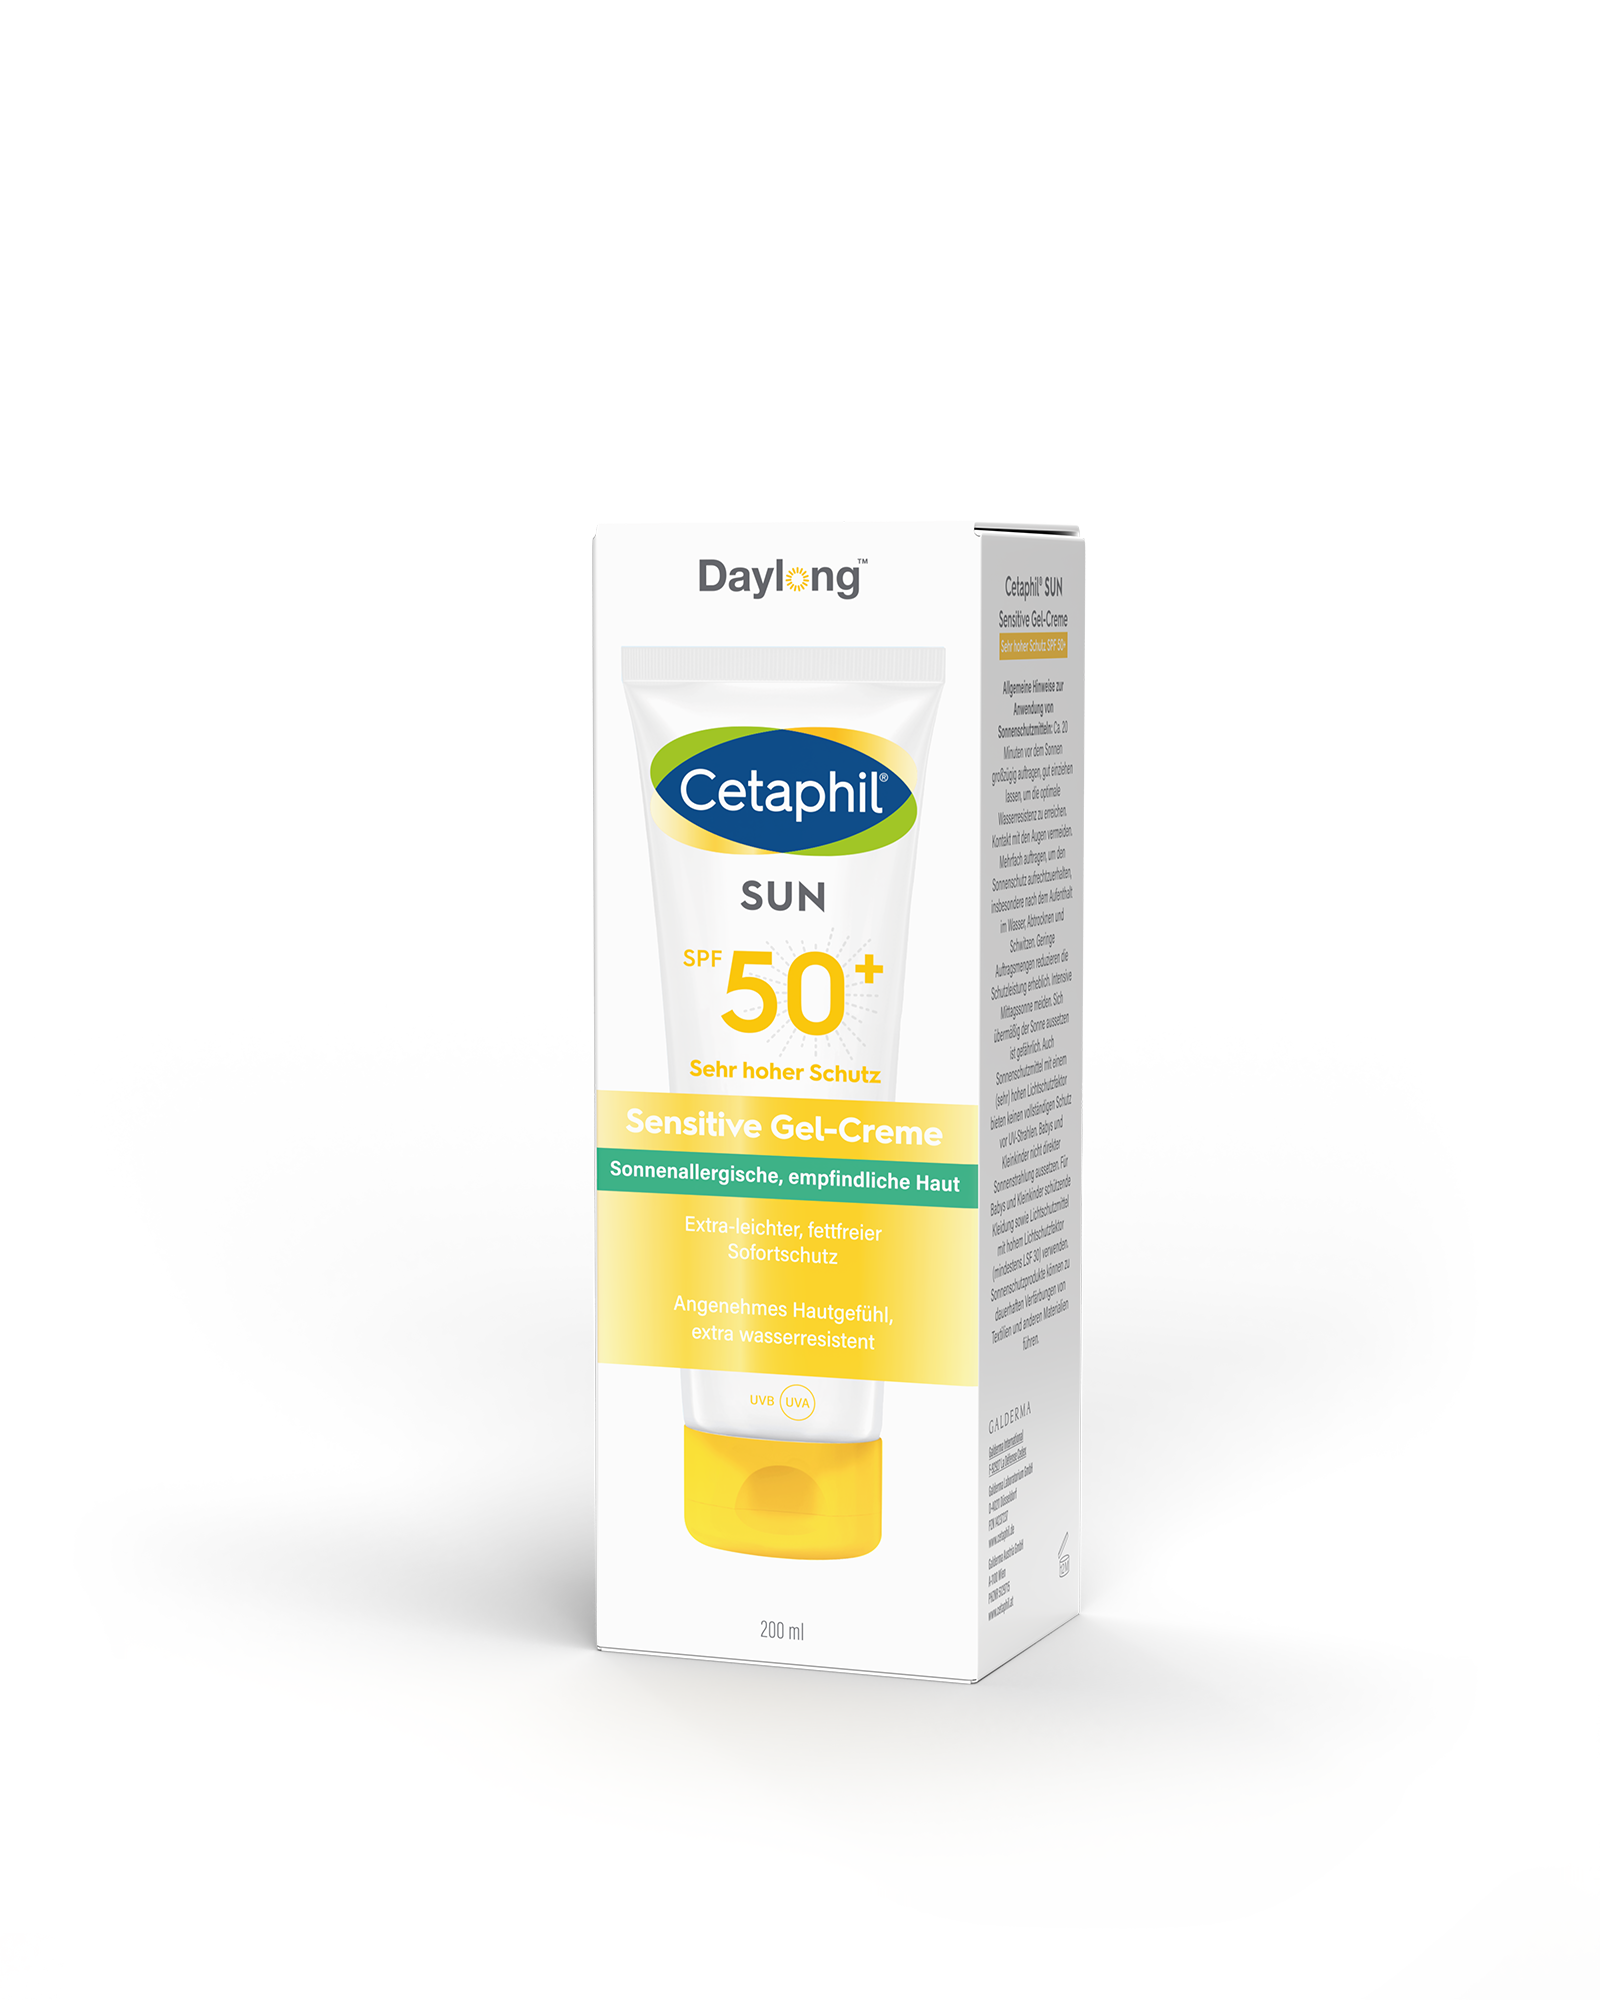 Cetaphil Sun Daylong SPF 50+ Sensitive Gel-Creme (200 ml)